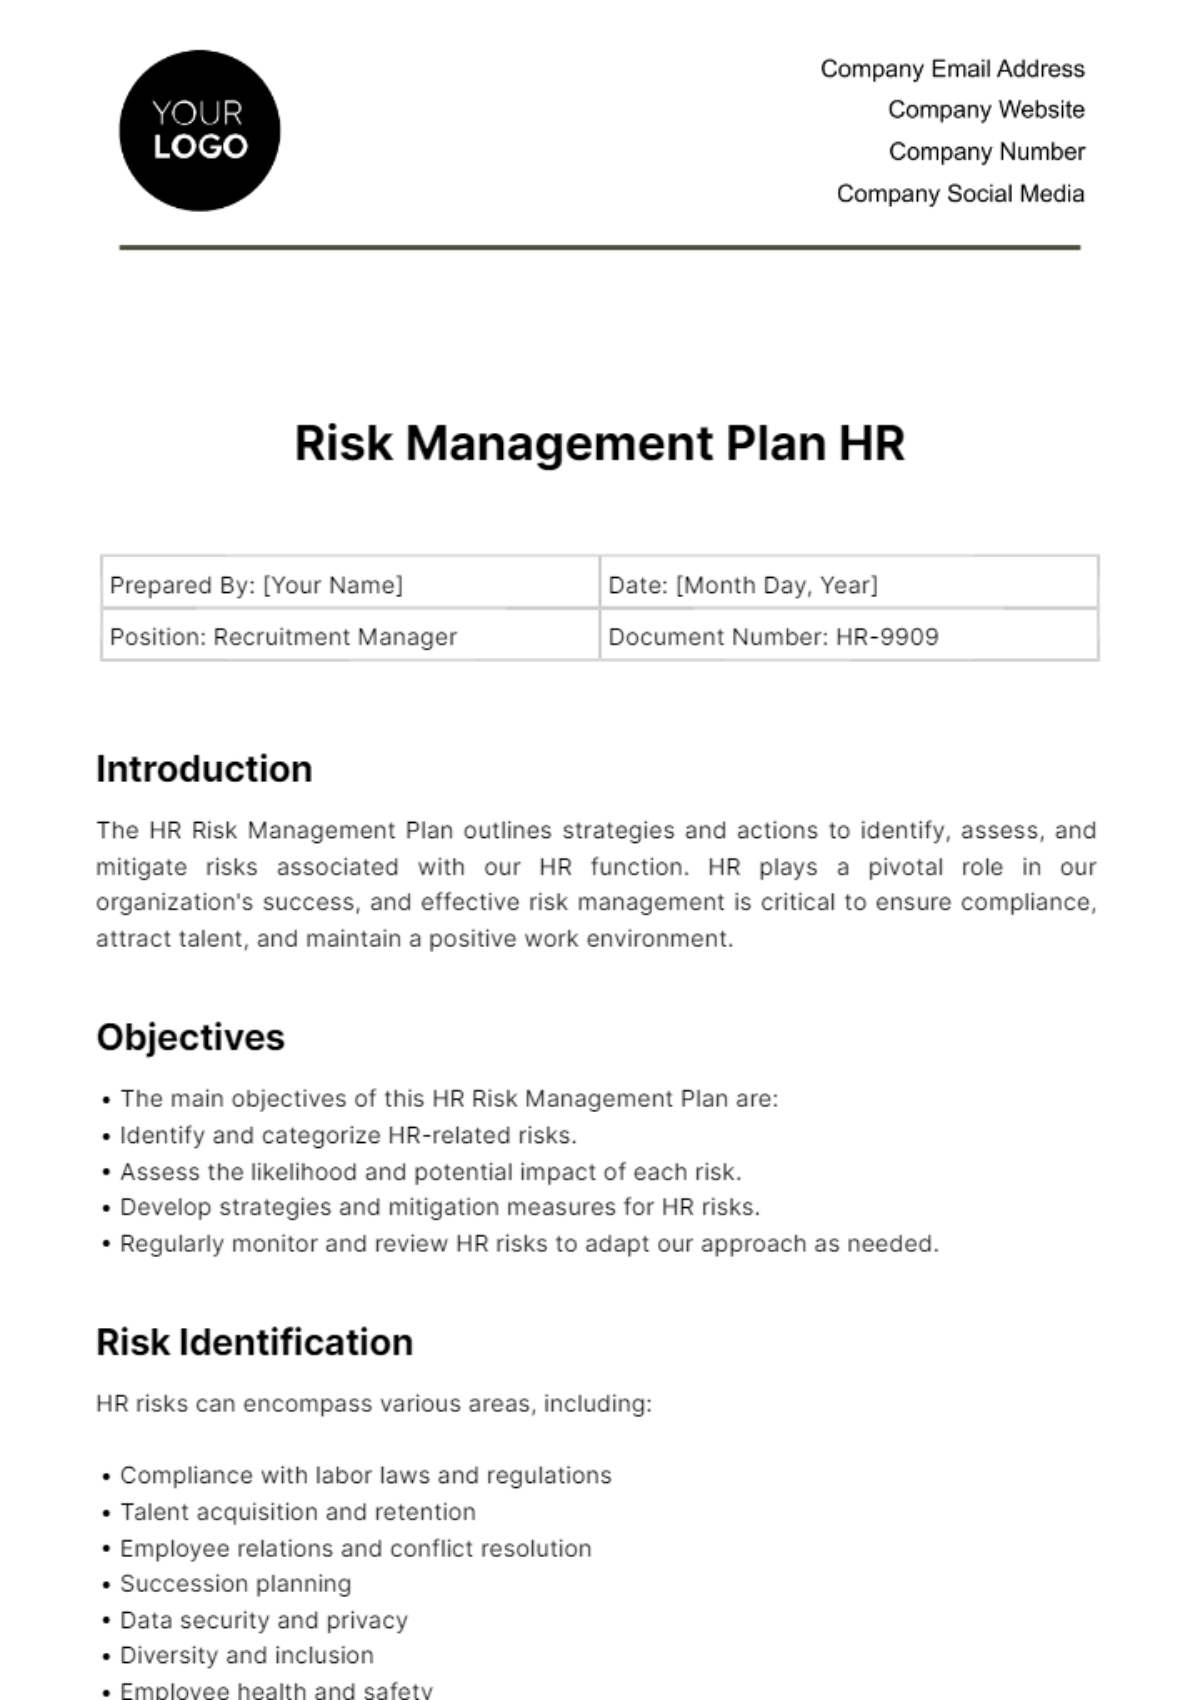 Free Risk Management Plan HR Template